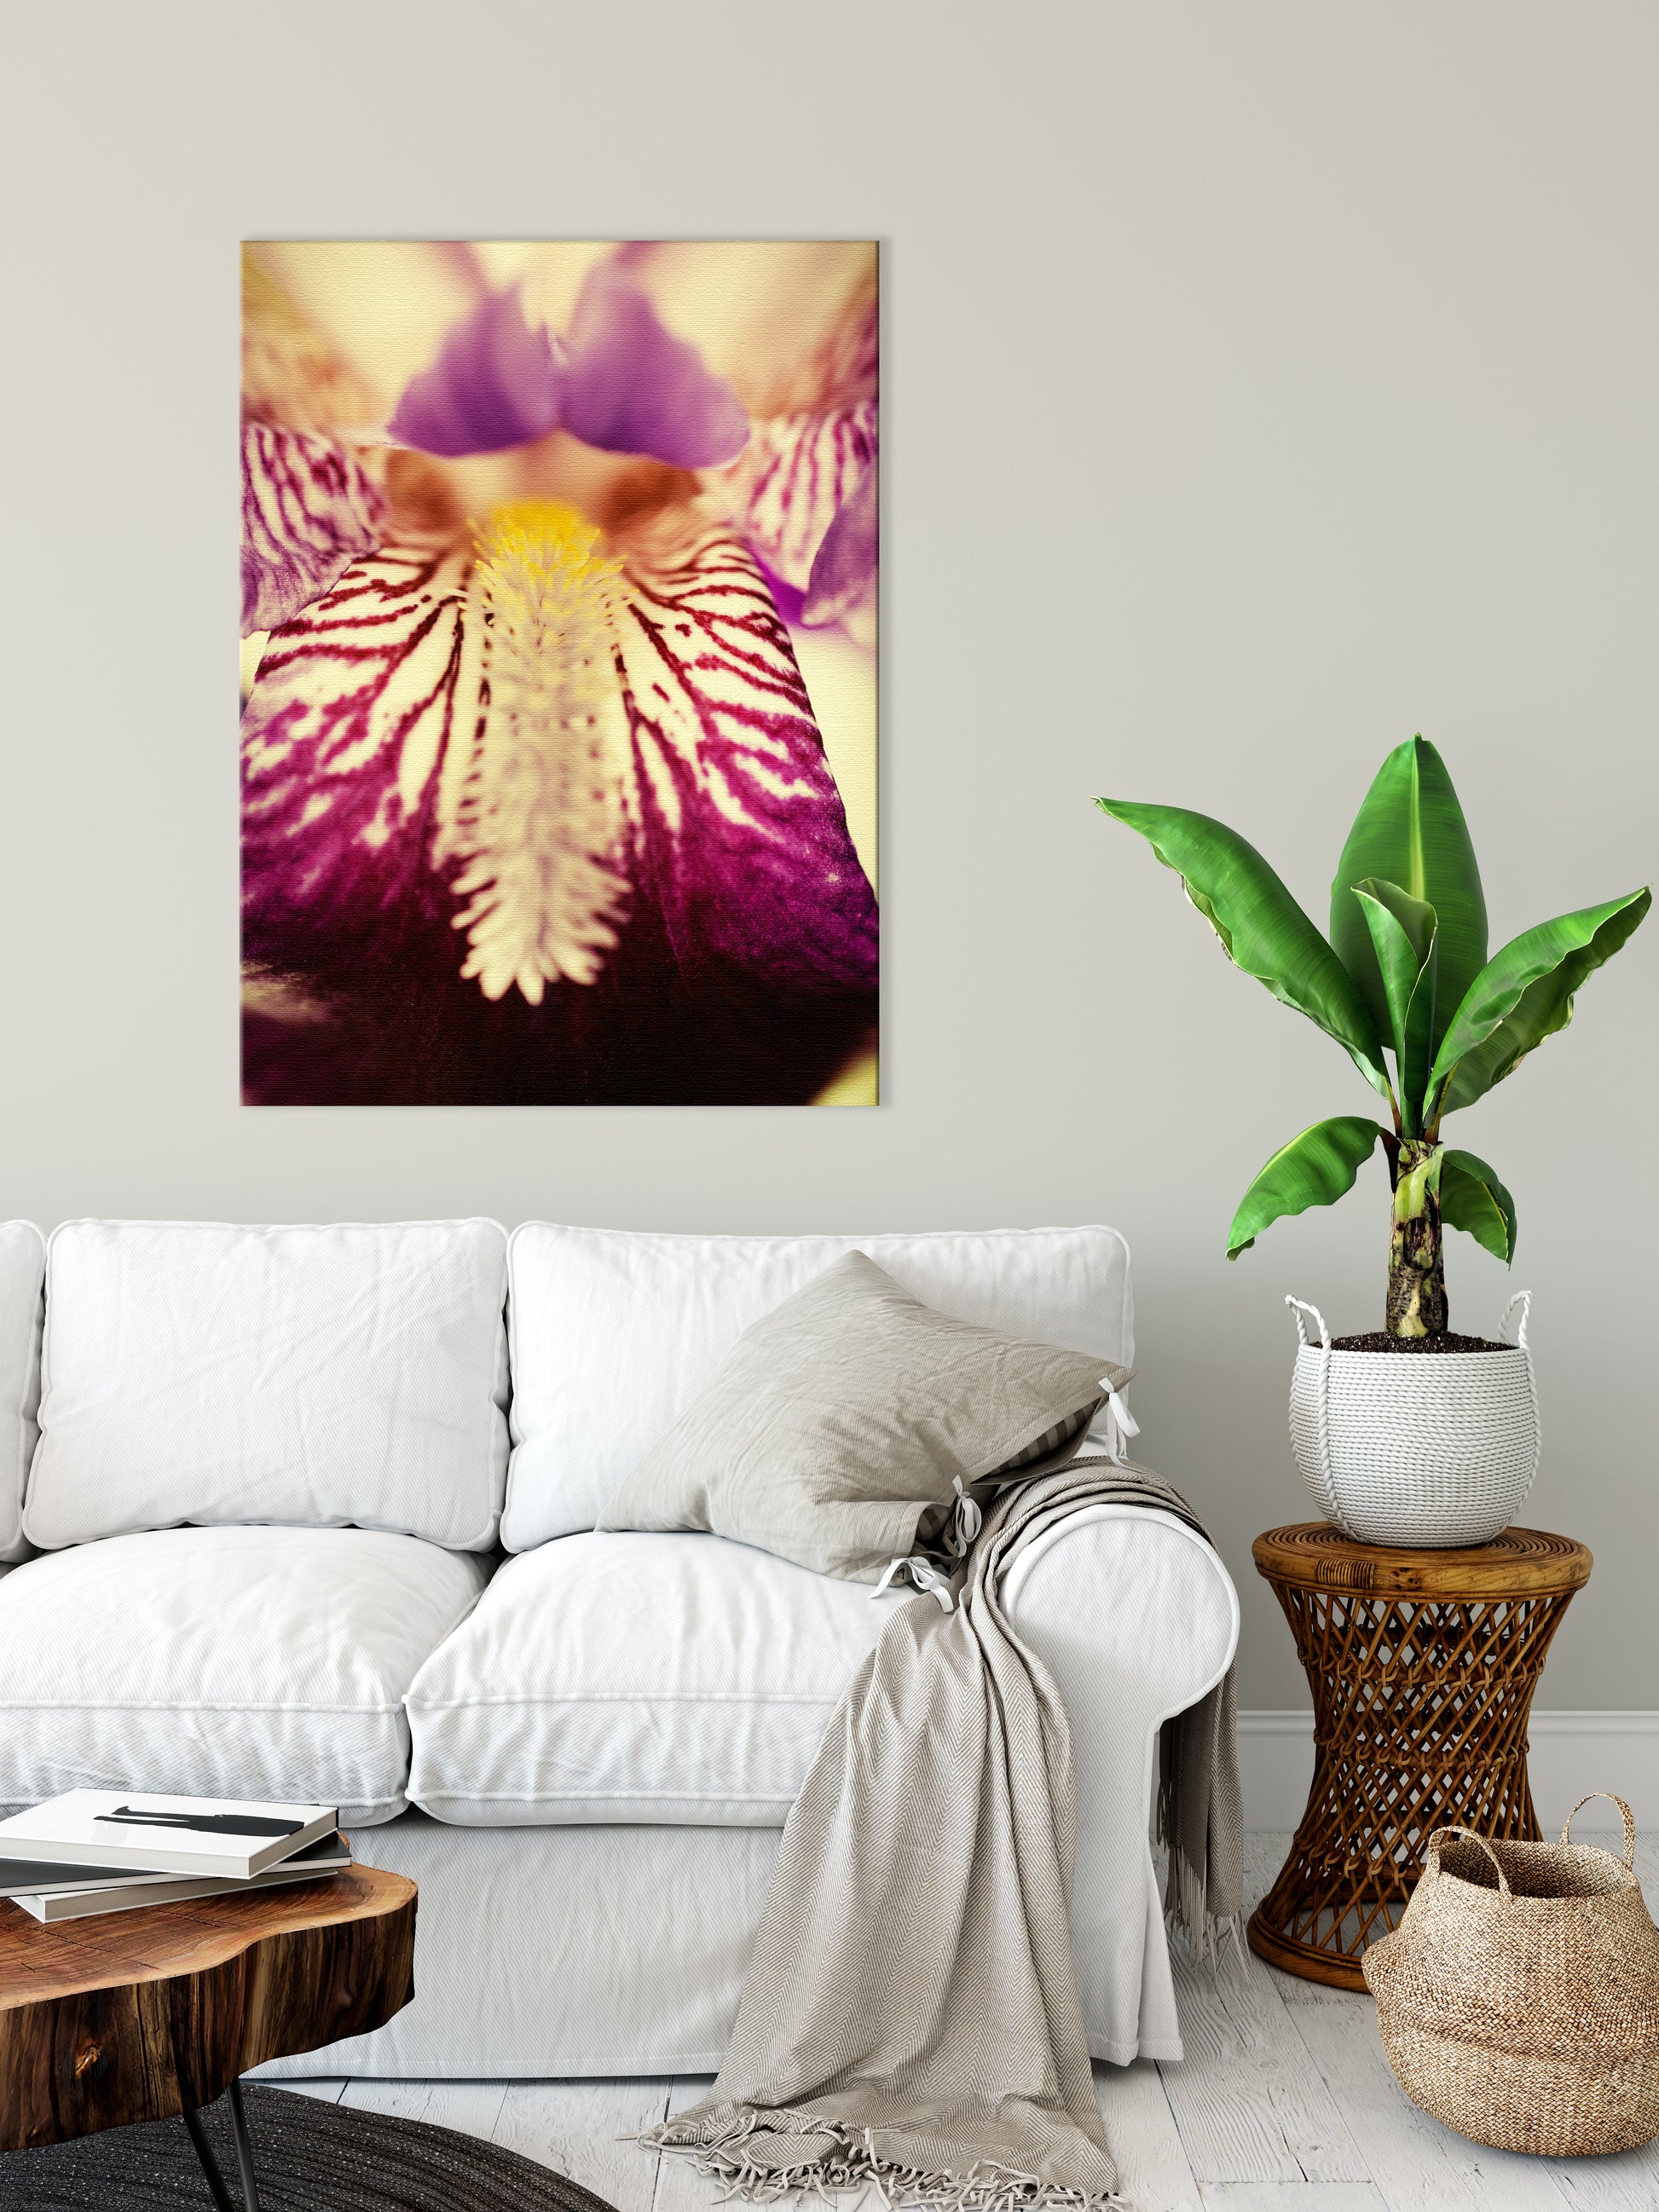 Big Canvas For Living Room: Antiqued Iris - Botanical / Floral / Flora / Flowers / Nature Photograph Canvas Wall Art Print - Artwork